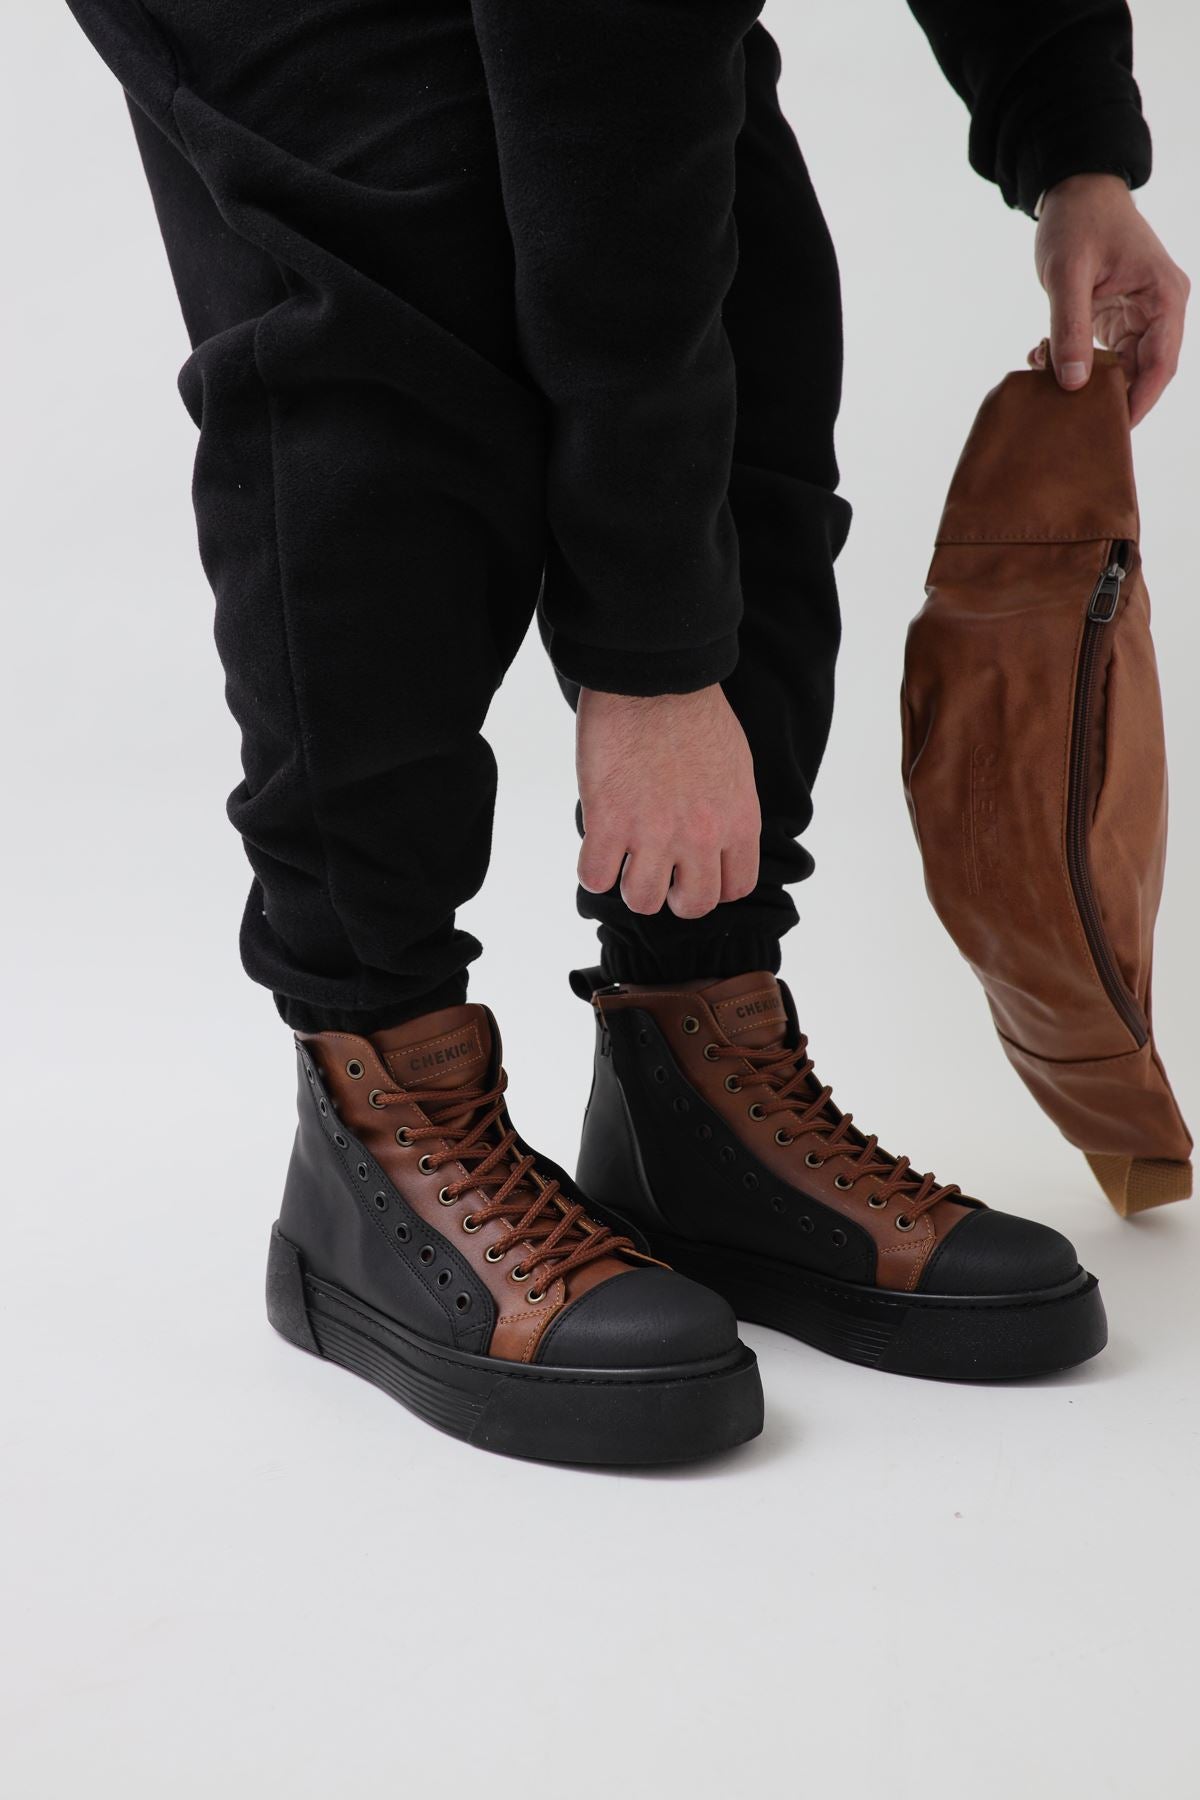 CH167 ST Men's Boots BLACK/TANK - STREETMODE™